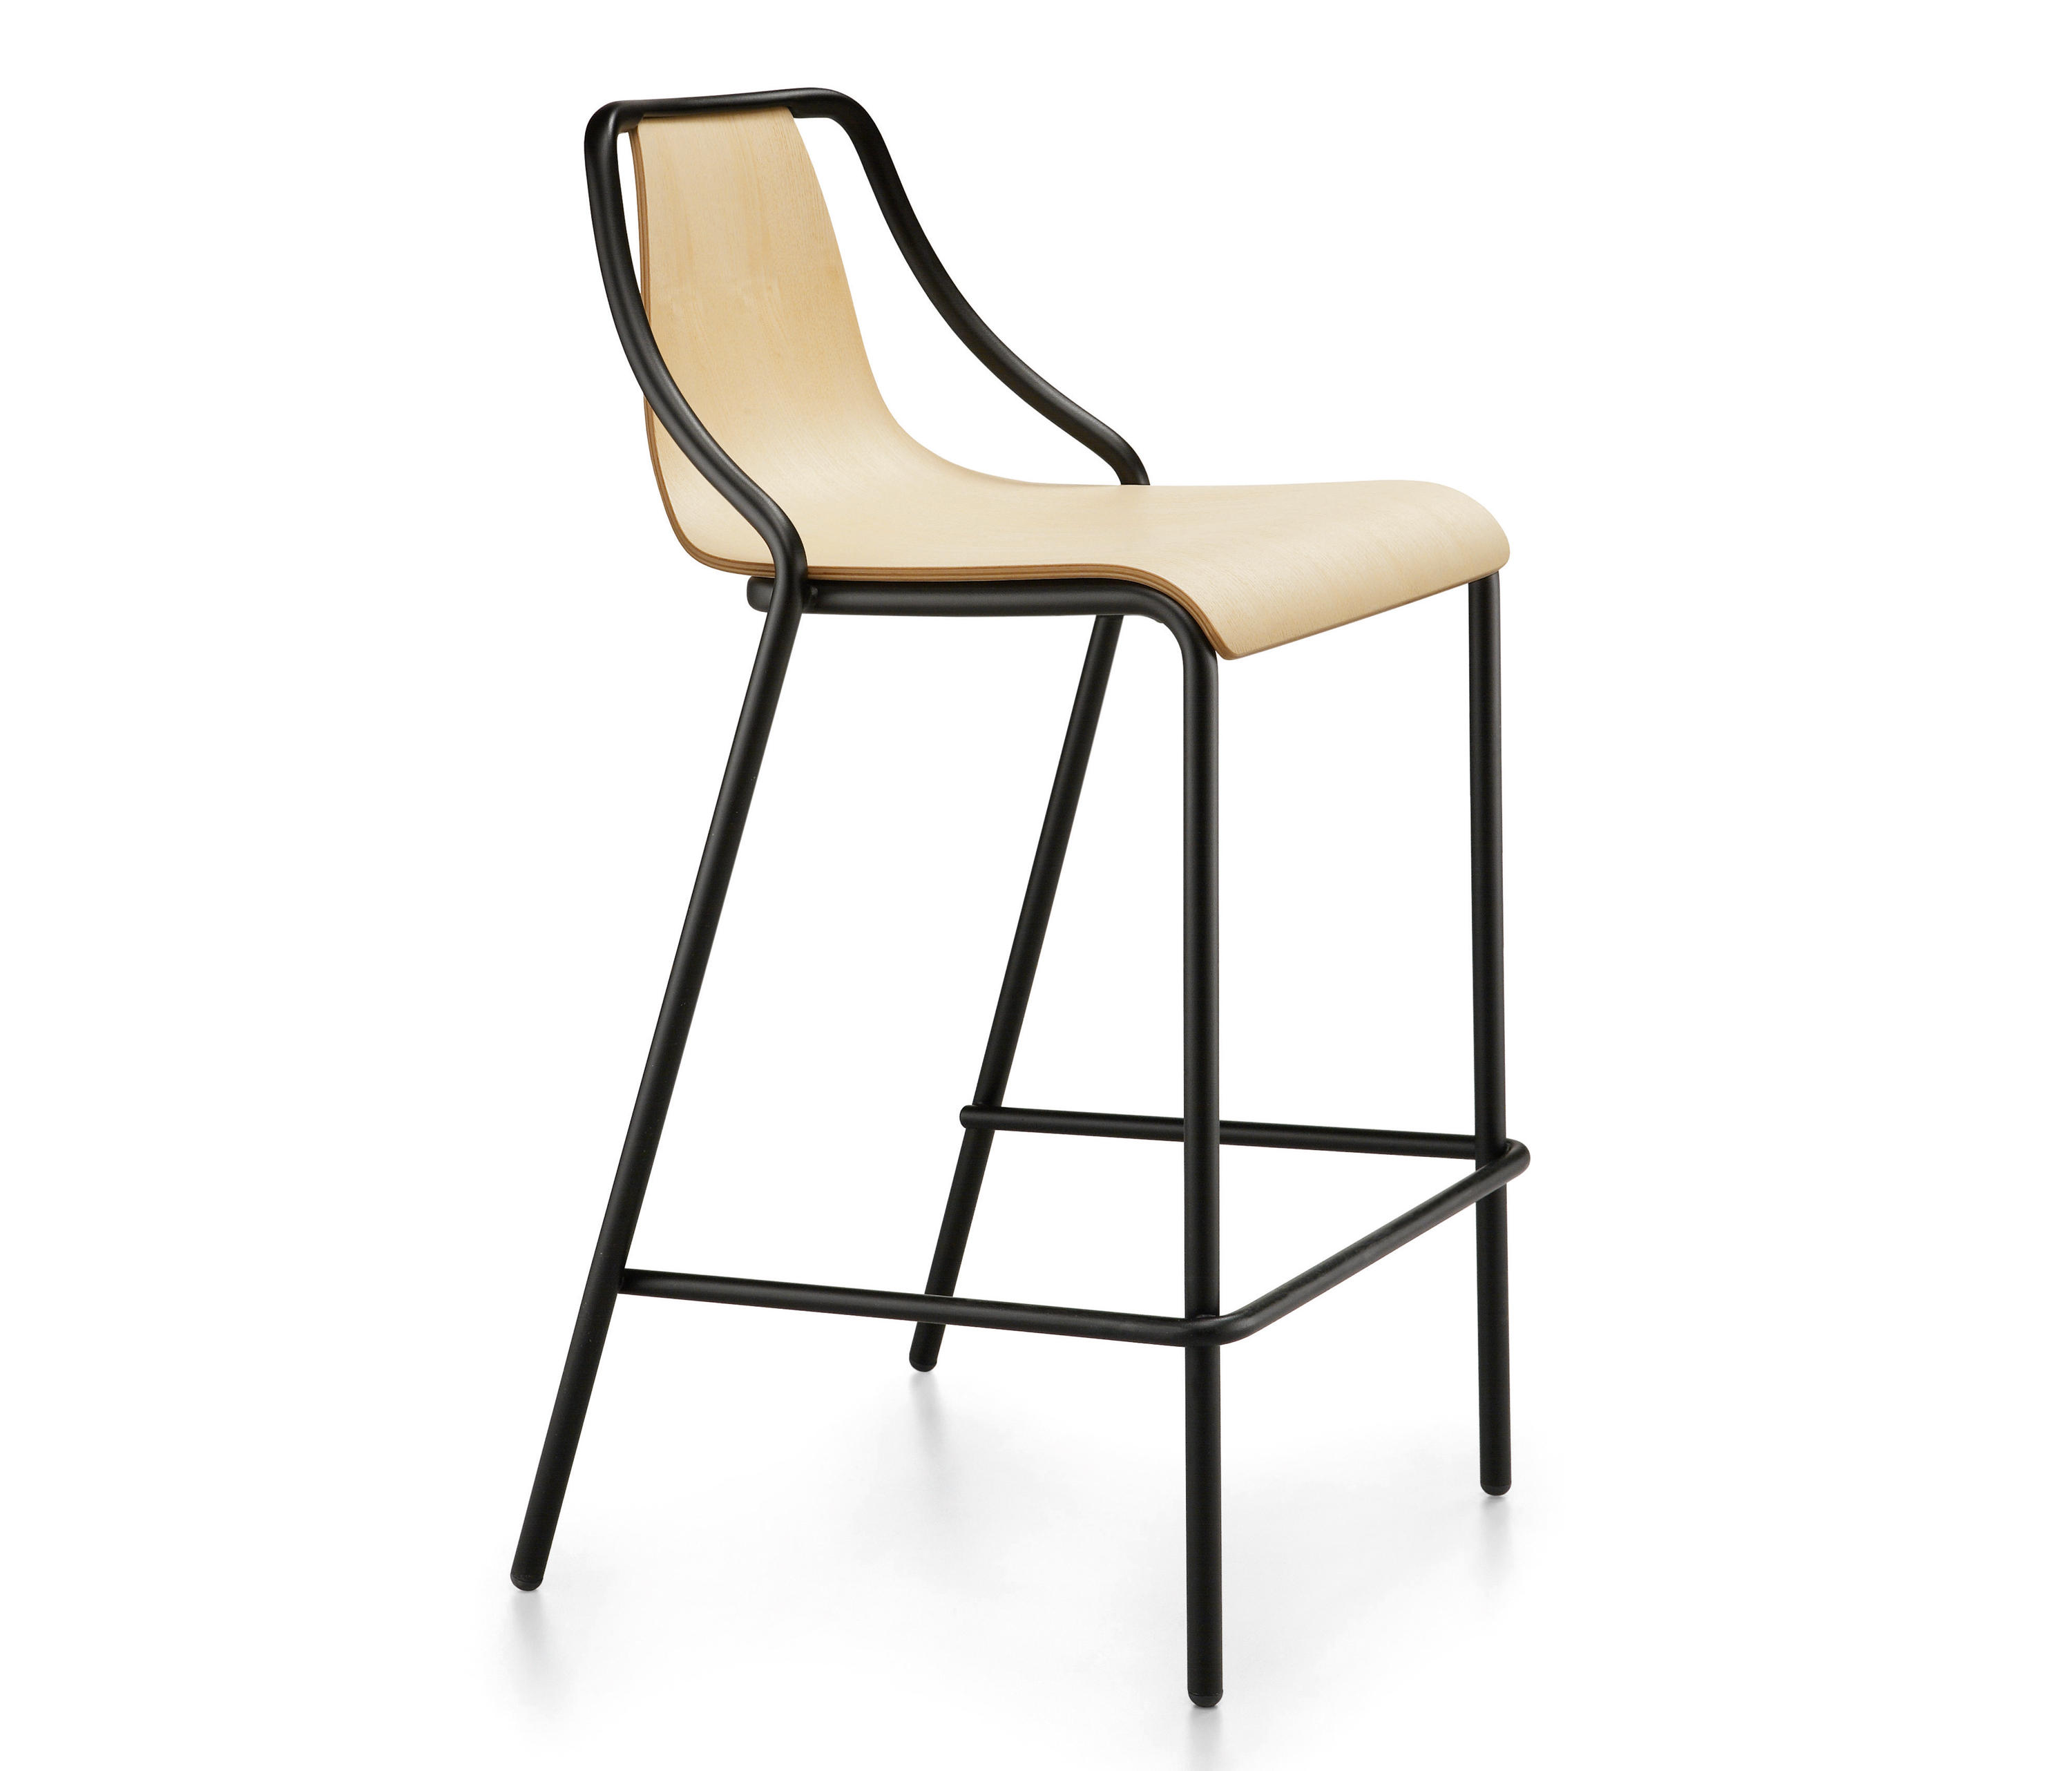 OLA H65 LG - Bar stools from Midj | Architonic